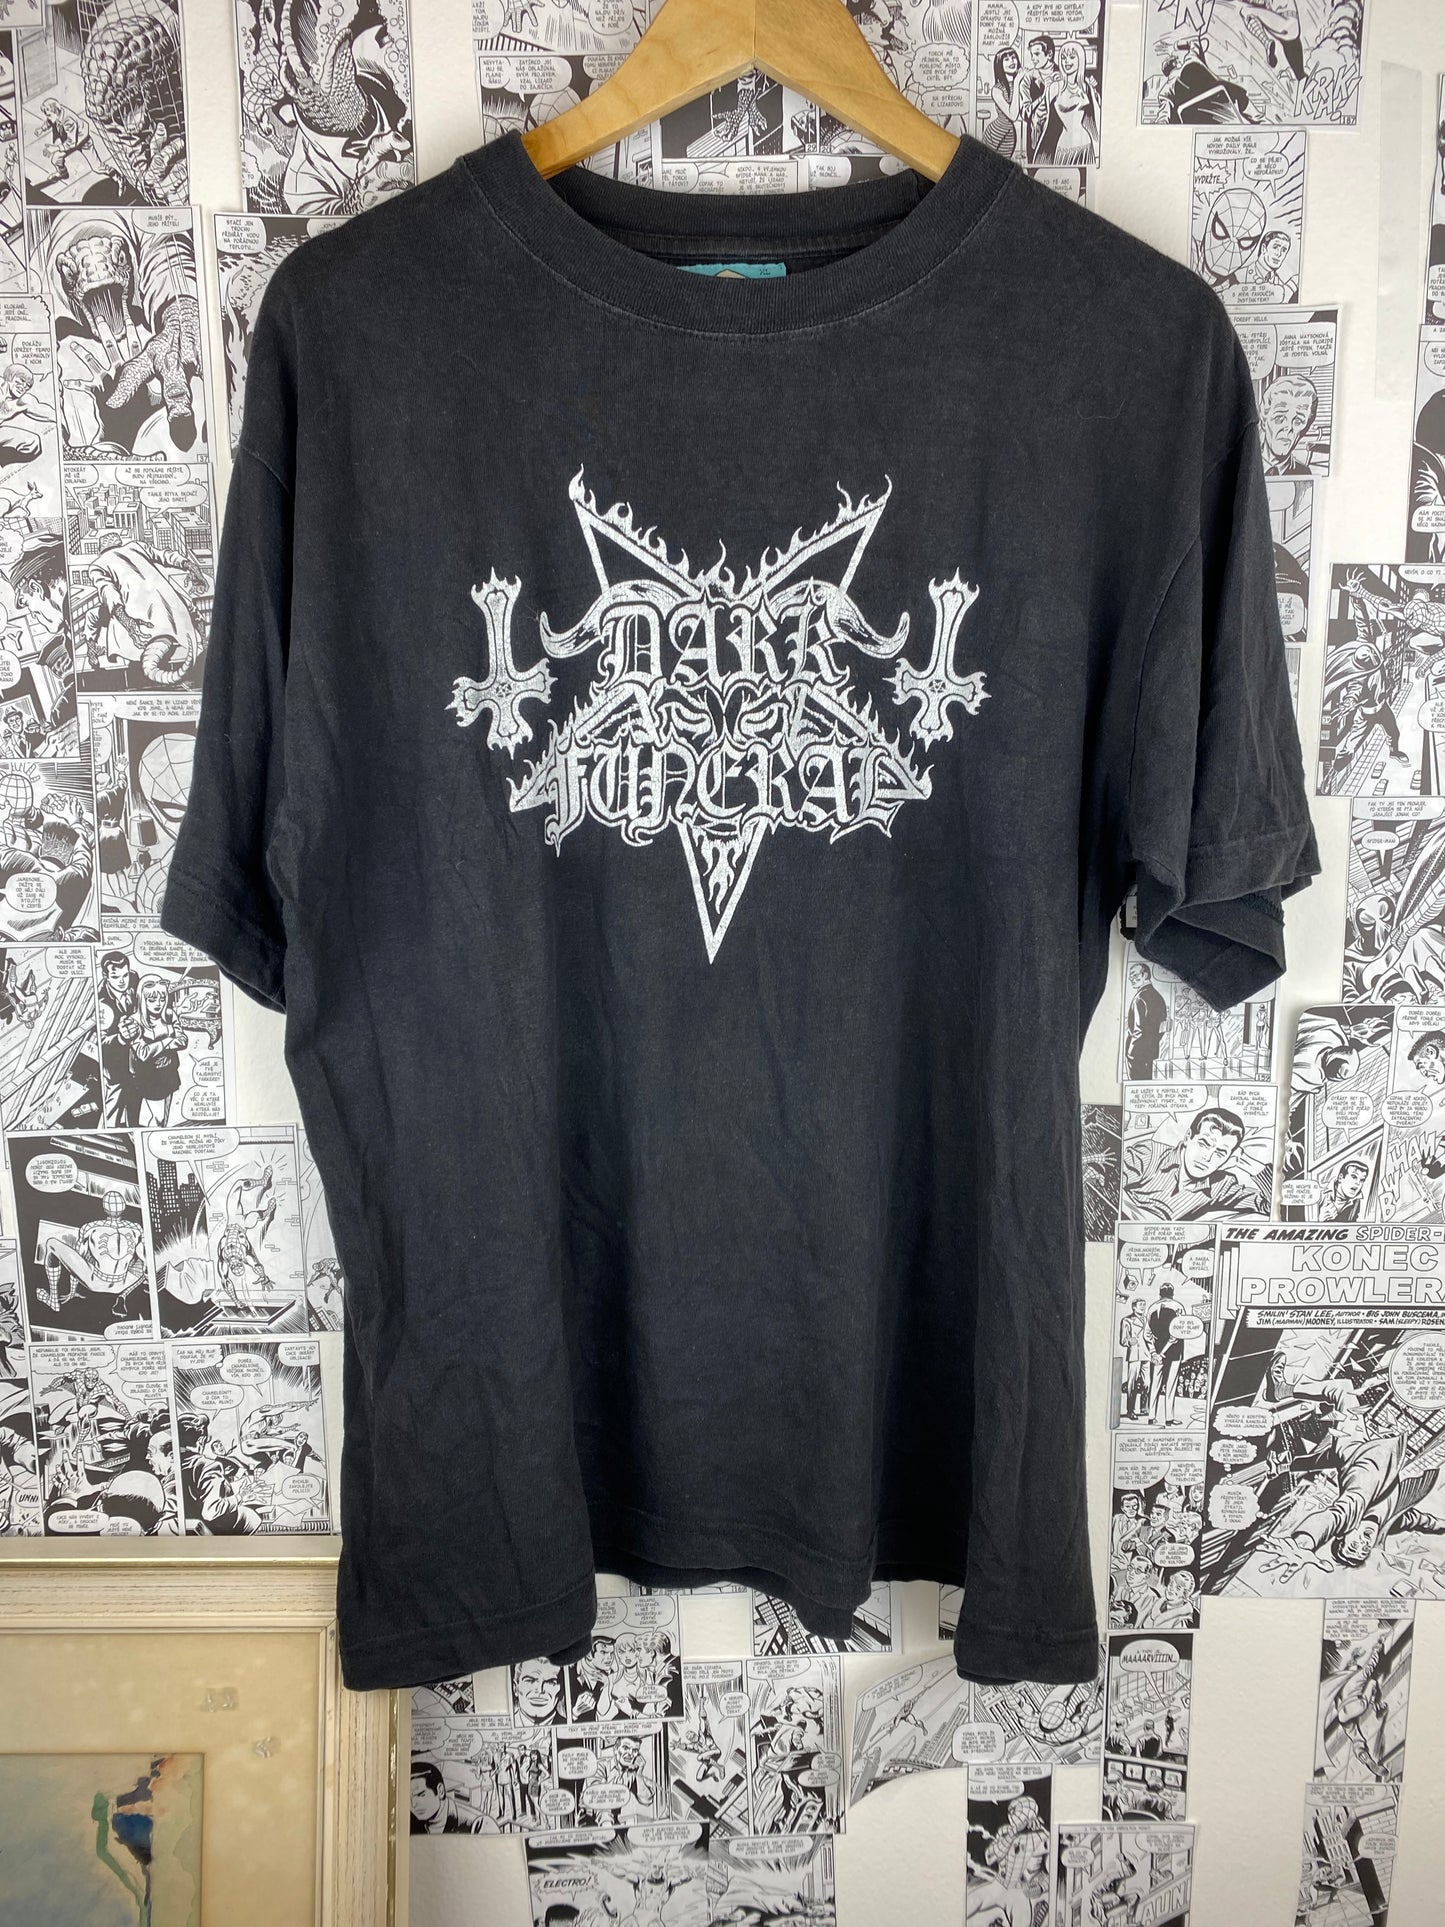 Vintage Dark Funeral “Satanic War Tour 1996” t-shirt - size XL